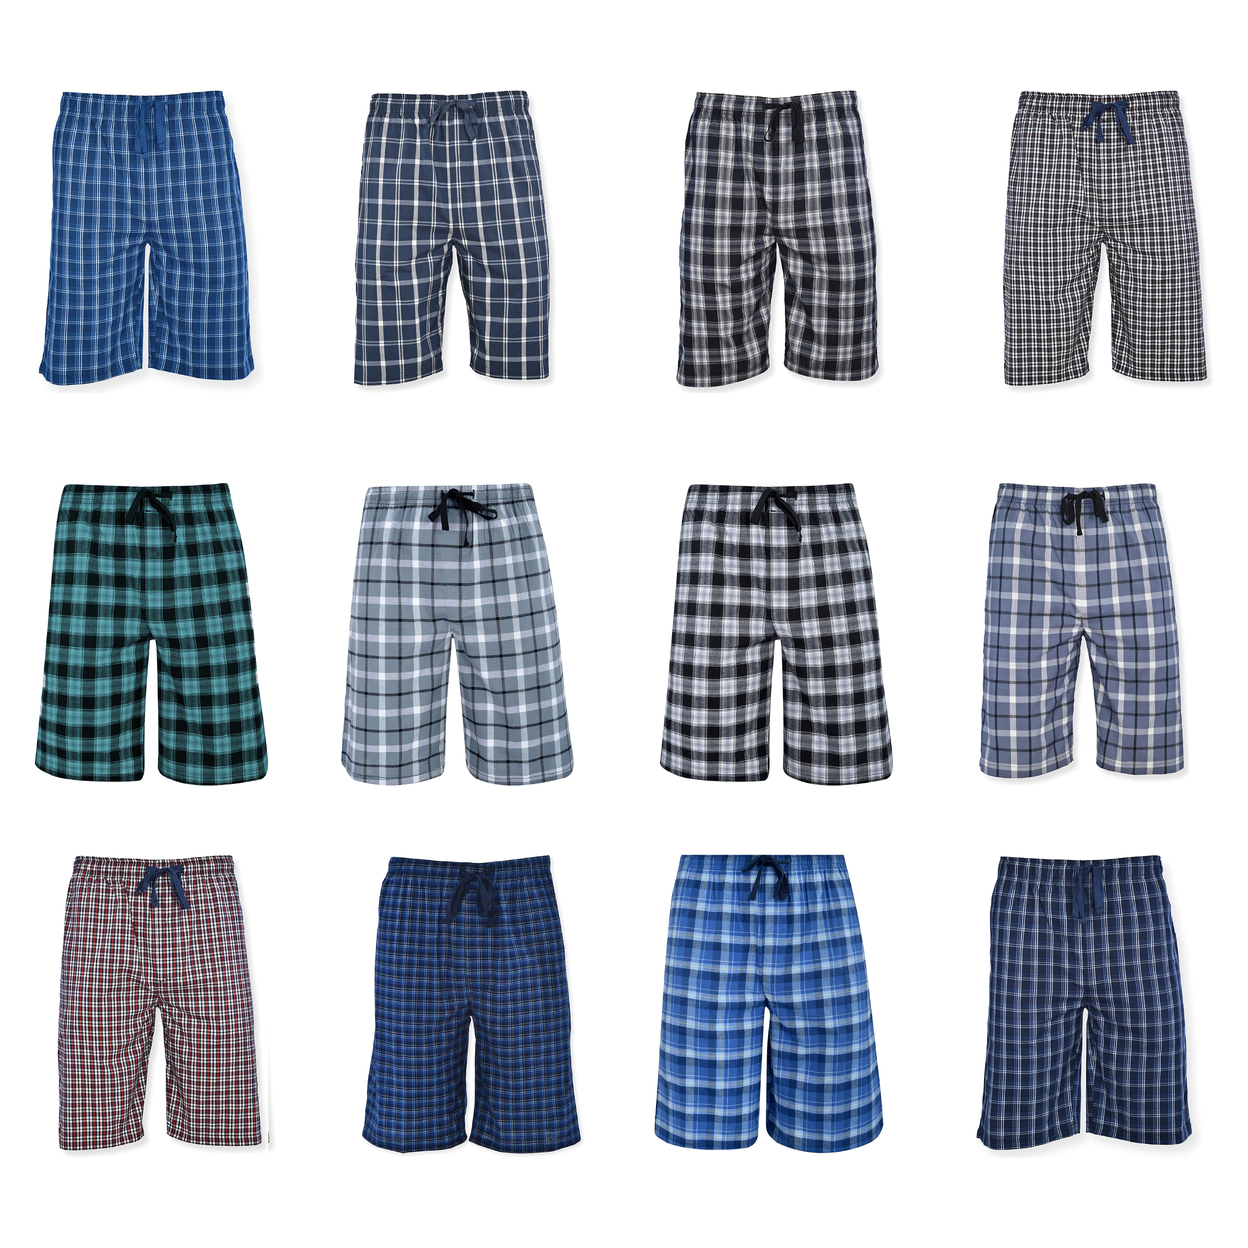 Men's Ultra-Soft Plaid Lounge Pajama Sleep Wear Shorts - Red, Small